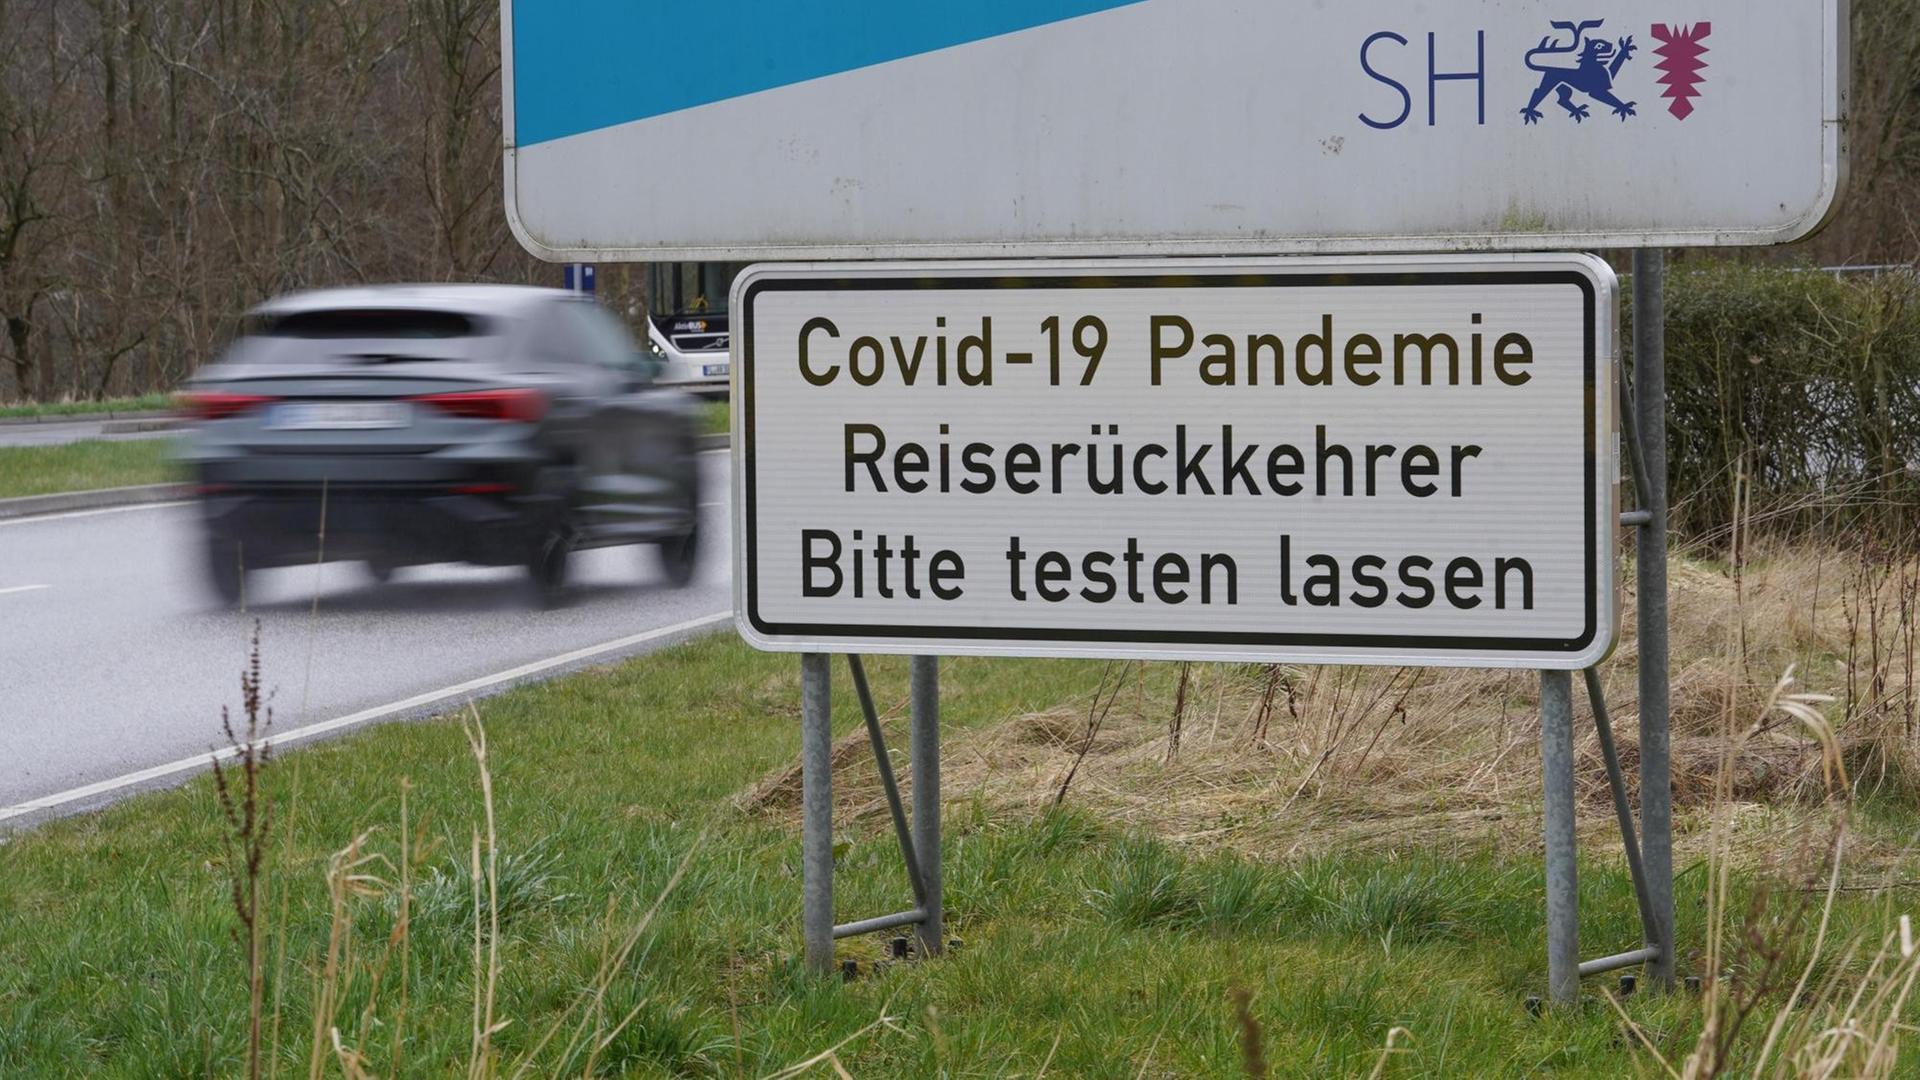 Am Grenzübergang Krusau  Kupfermühle steht bei der Einreise nach Deutschland ein Schild mit der Aufschrift "Covid-19 Pandemie Reiserückkehrer Bitte testen lassen". Die Einreise von Personen, die weder die dänische Staatsangehörigkeit noch Wohnsitz in Dänemark haben, ist grundsätzlich nur noch erlaubt, wenn ein triftiger Grund für die Reise vorliegt und ein negatives Ergebnis eines COVID-19-Tests vorgelegt wird, der maximal 24 Stunden vor Einreise vorgenommen wurde. Für die Grenzregion Schleswig-Holstein gelten Sonderregeln.